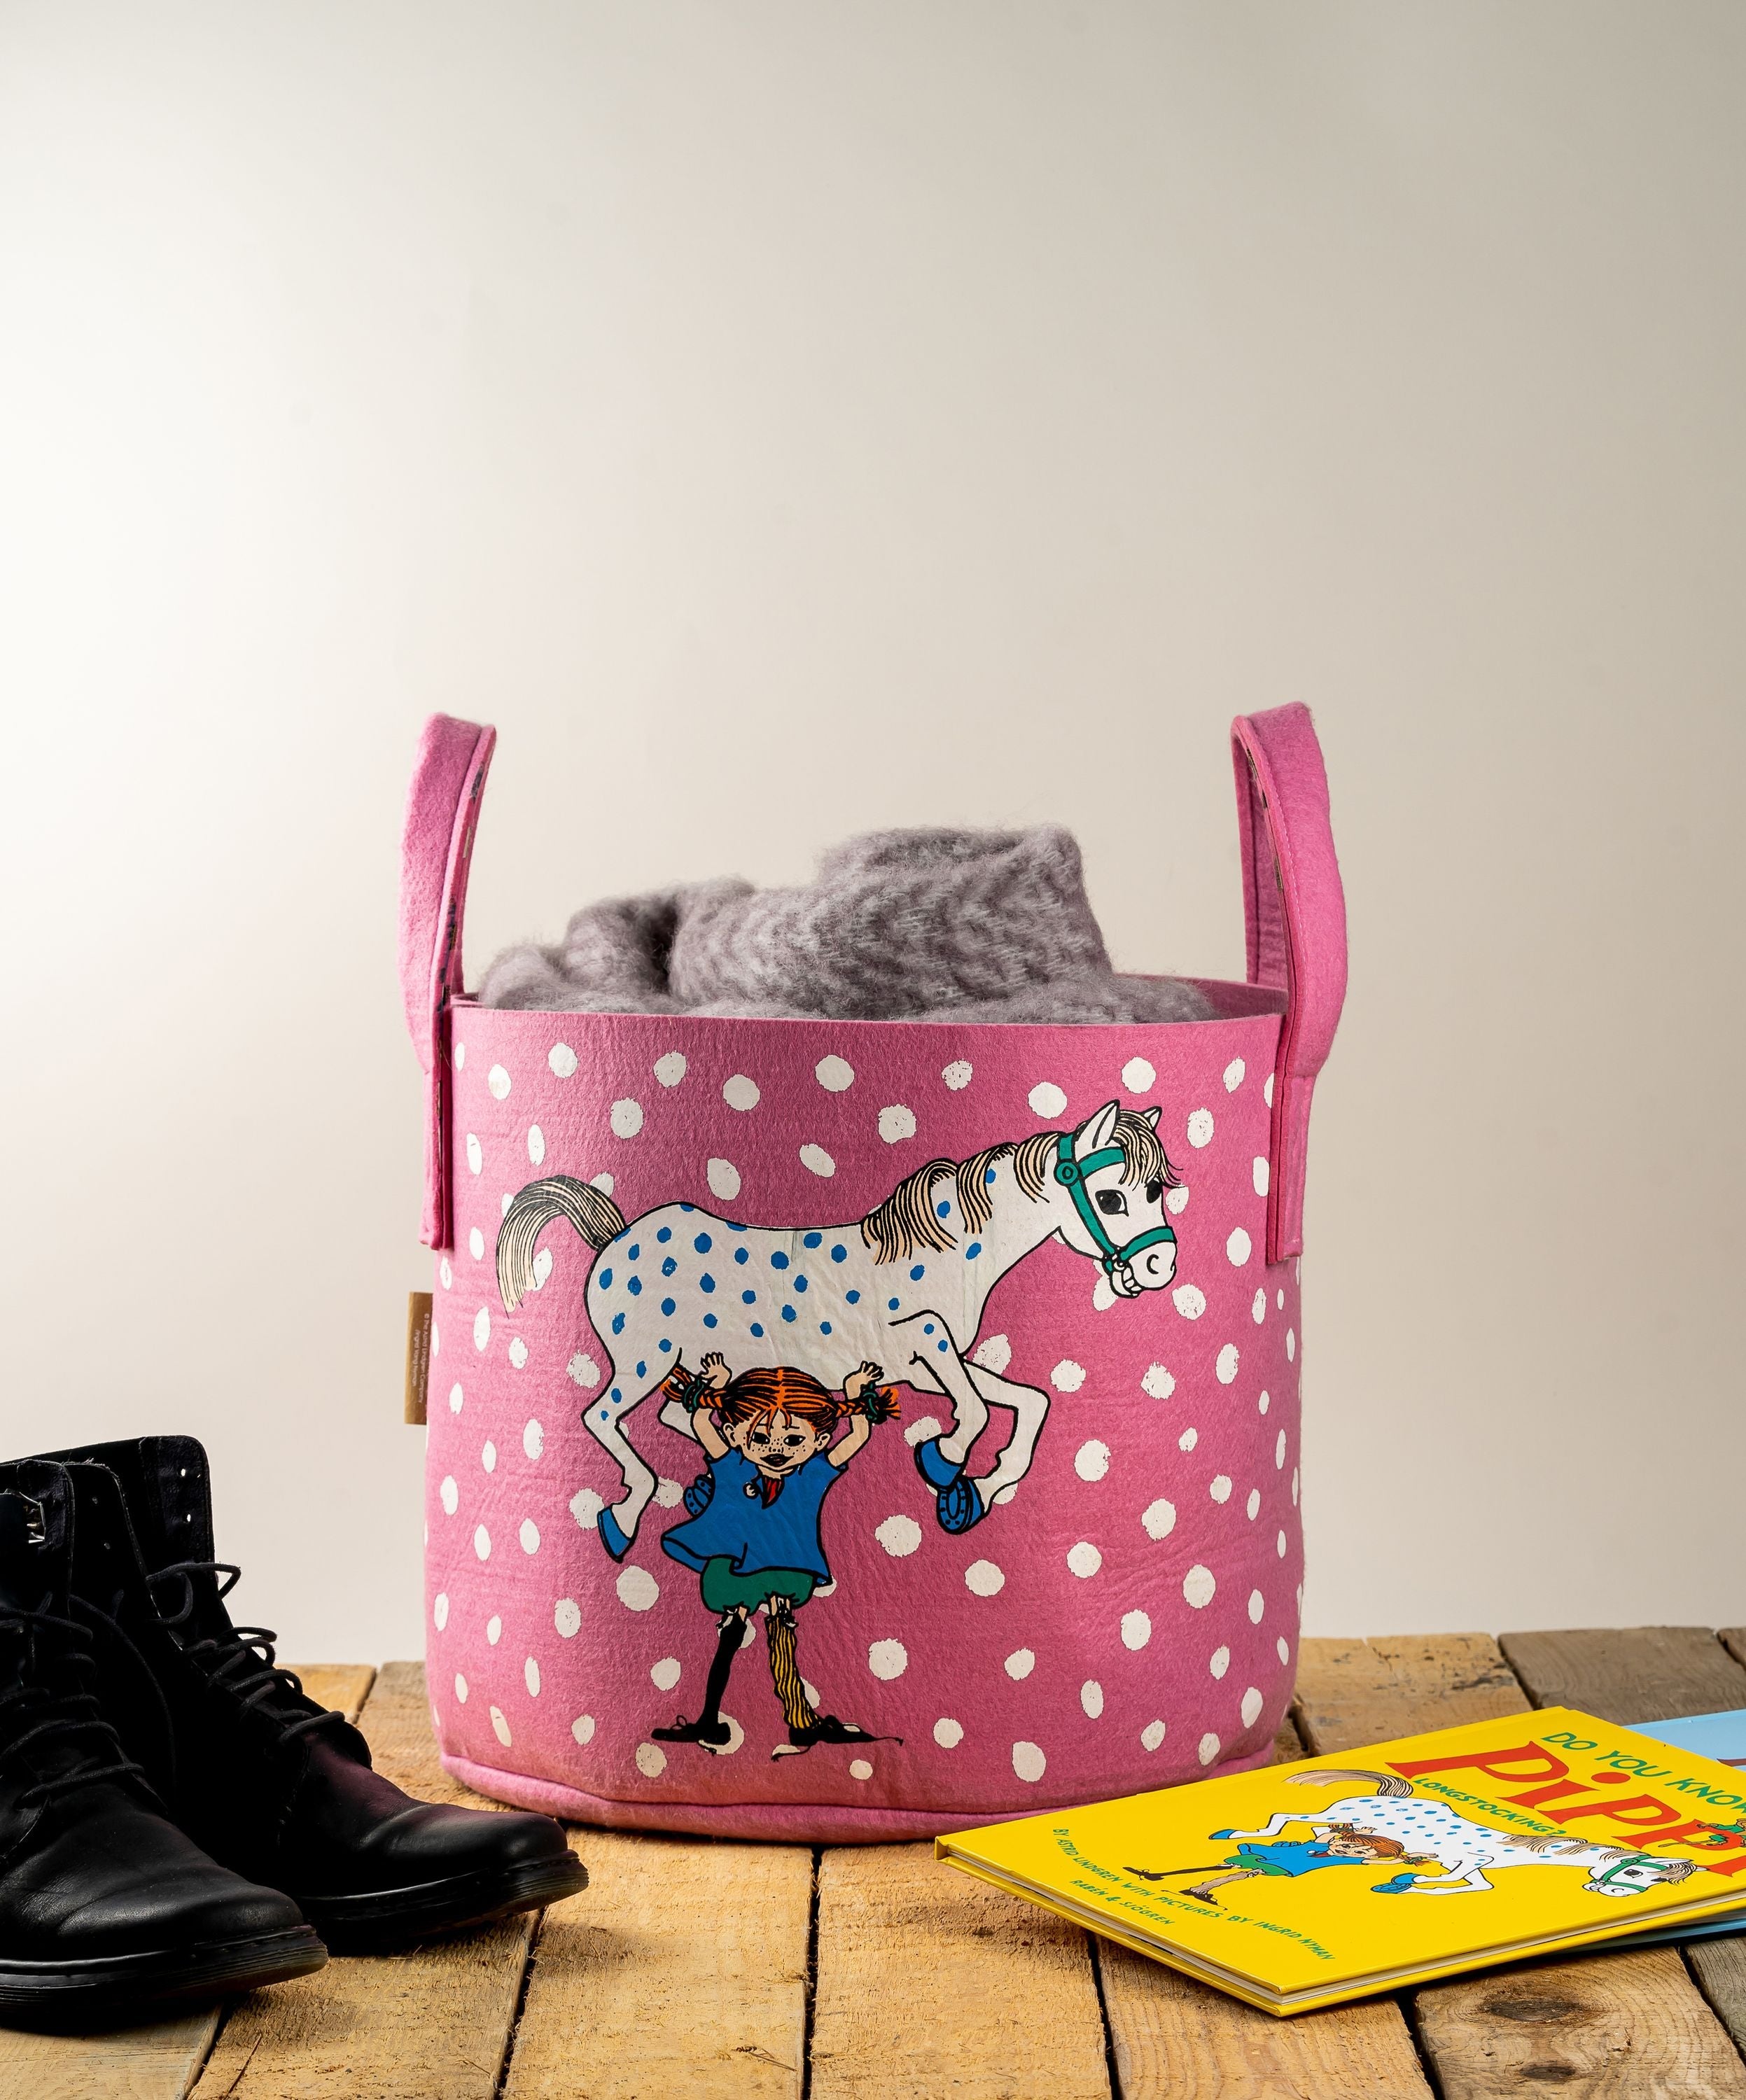 Muurla Pippi Longstocking Storage Basket, Pippi And The Horse, Pink